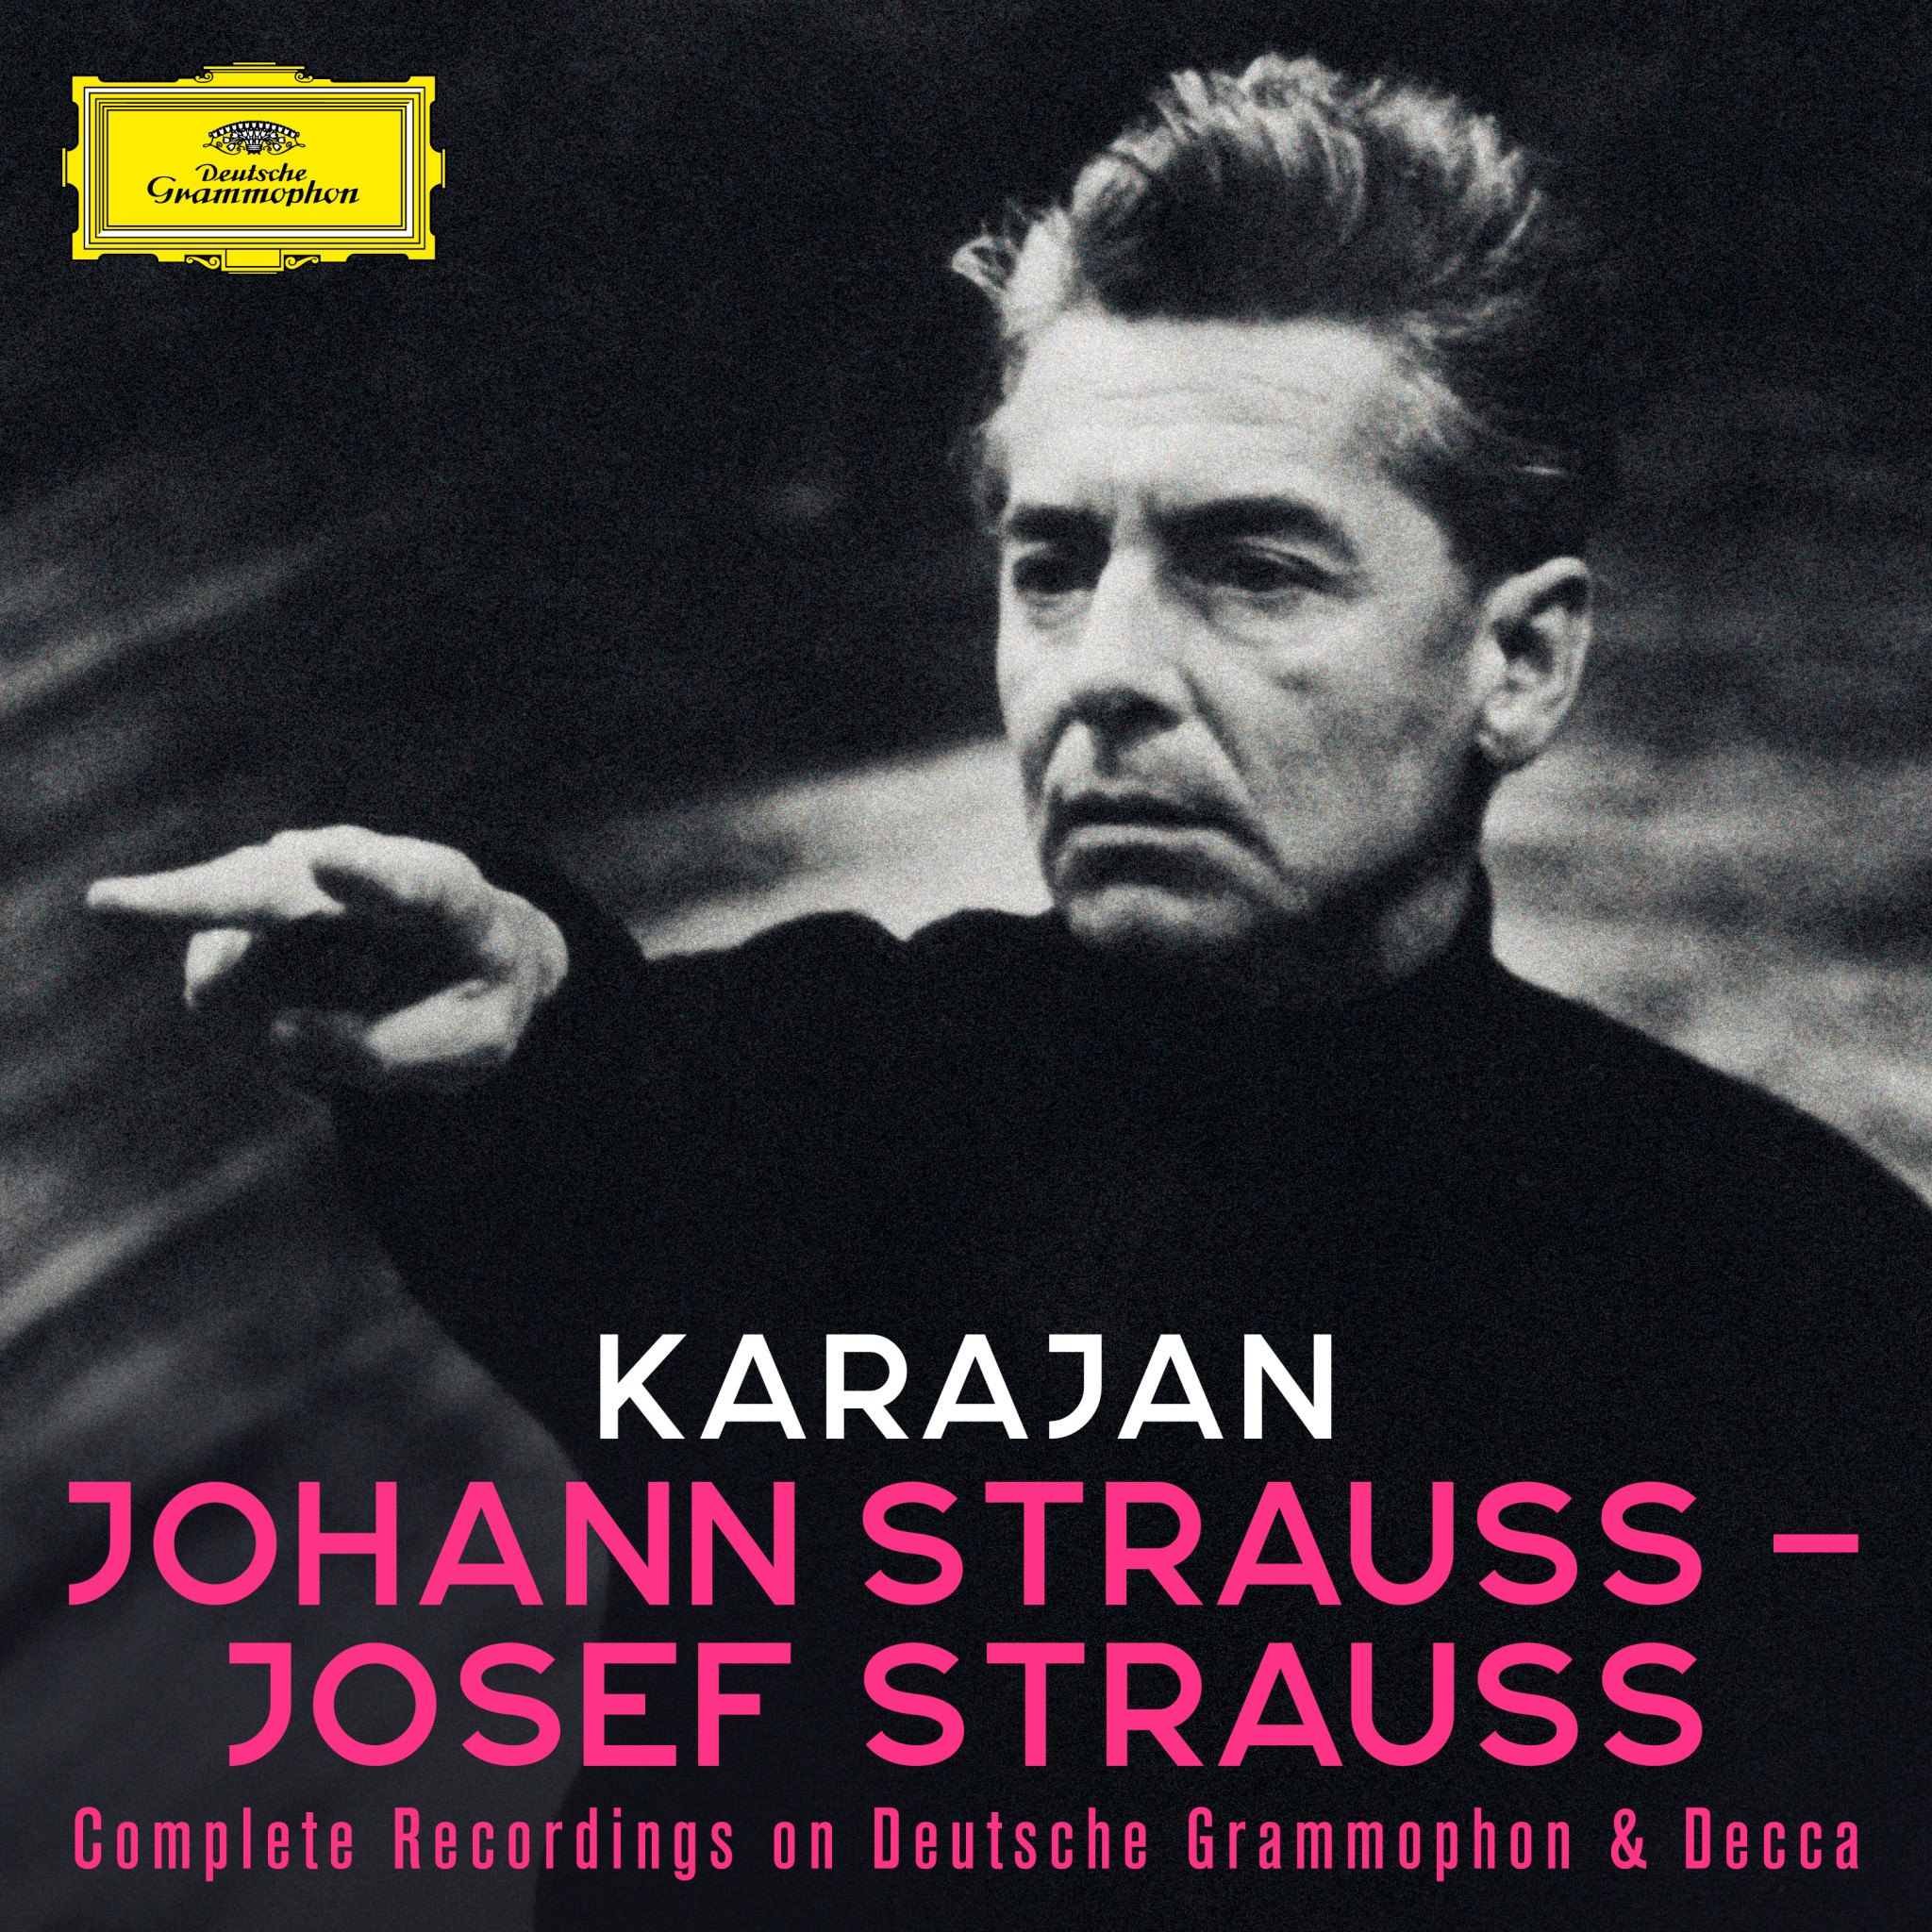 Karajan - Johann Strauss - Josef Strauss